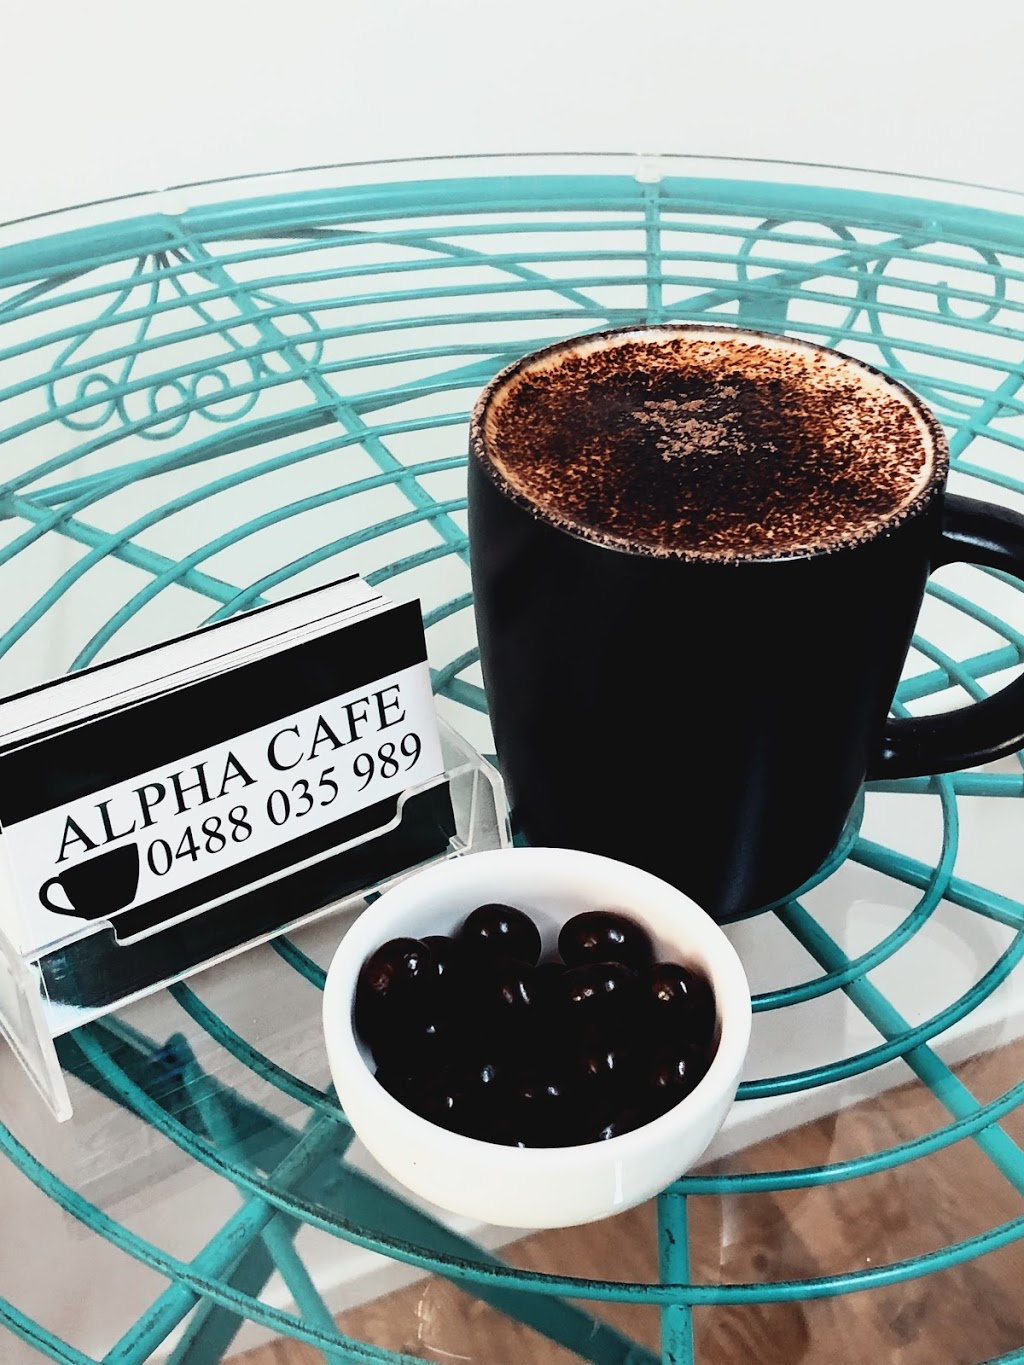 Alpha Cafè | cafe | 5/3 Cessna St, Marcoola QLD 4564, Australia | 0488035989 OR +61 488 035 989